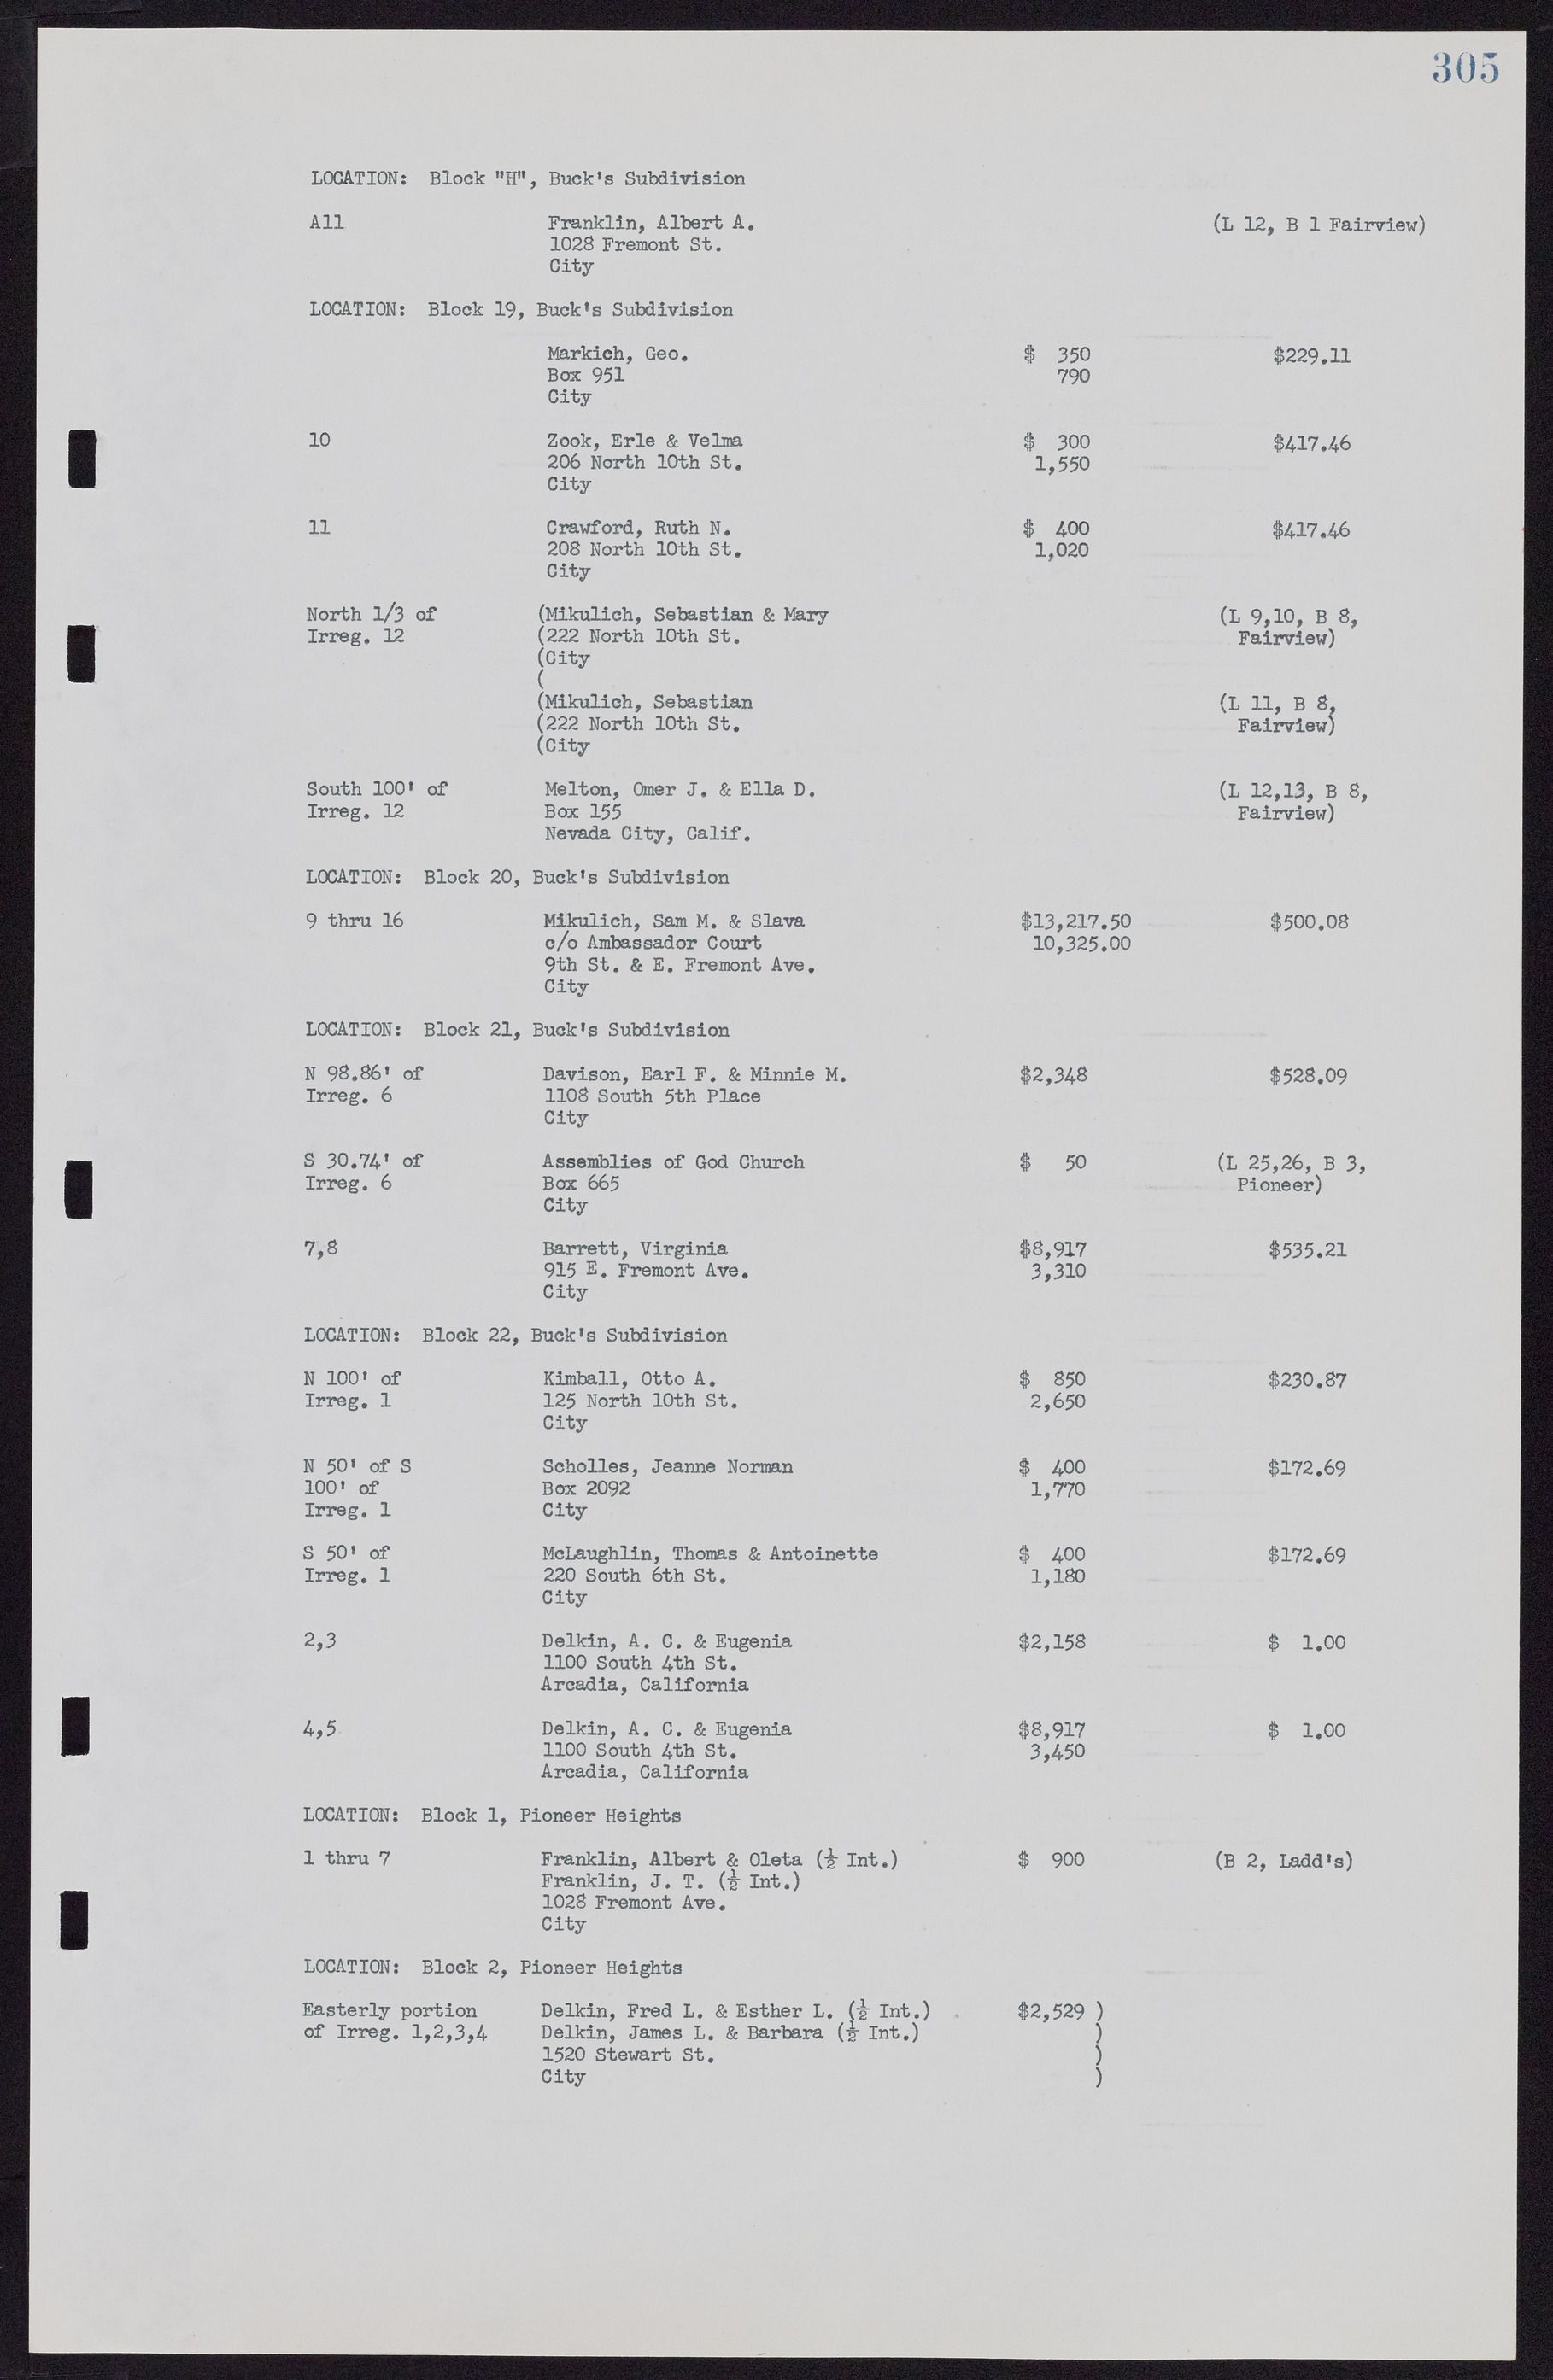 Las Vegas City Commission Minutes, November 7, 1949 to May 21, 1952, lvc000007-317